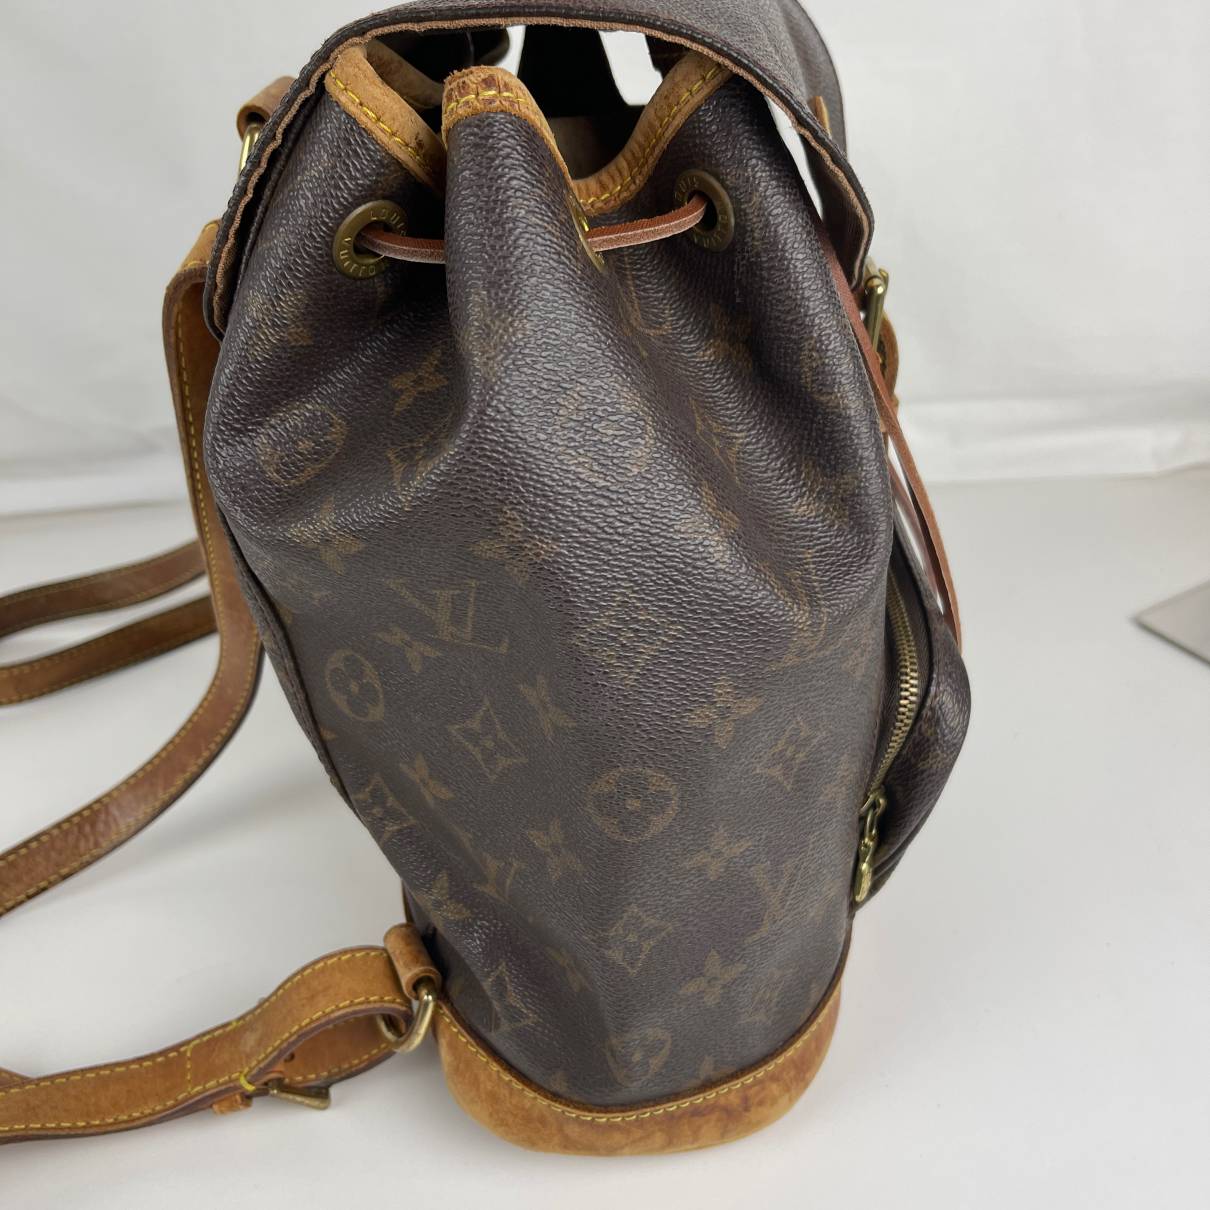 vintage Louis Vuitton Backpacks for Women - Vestiaire Collective